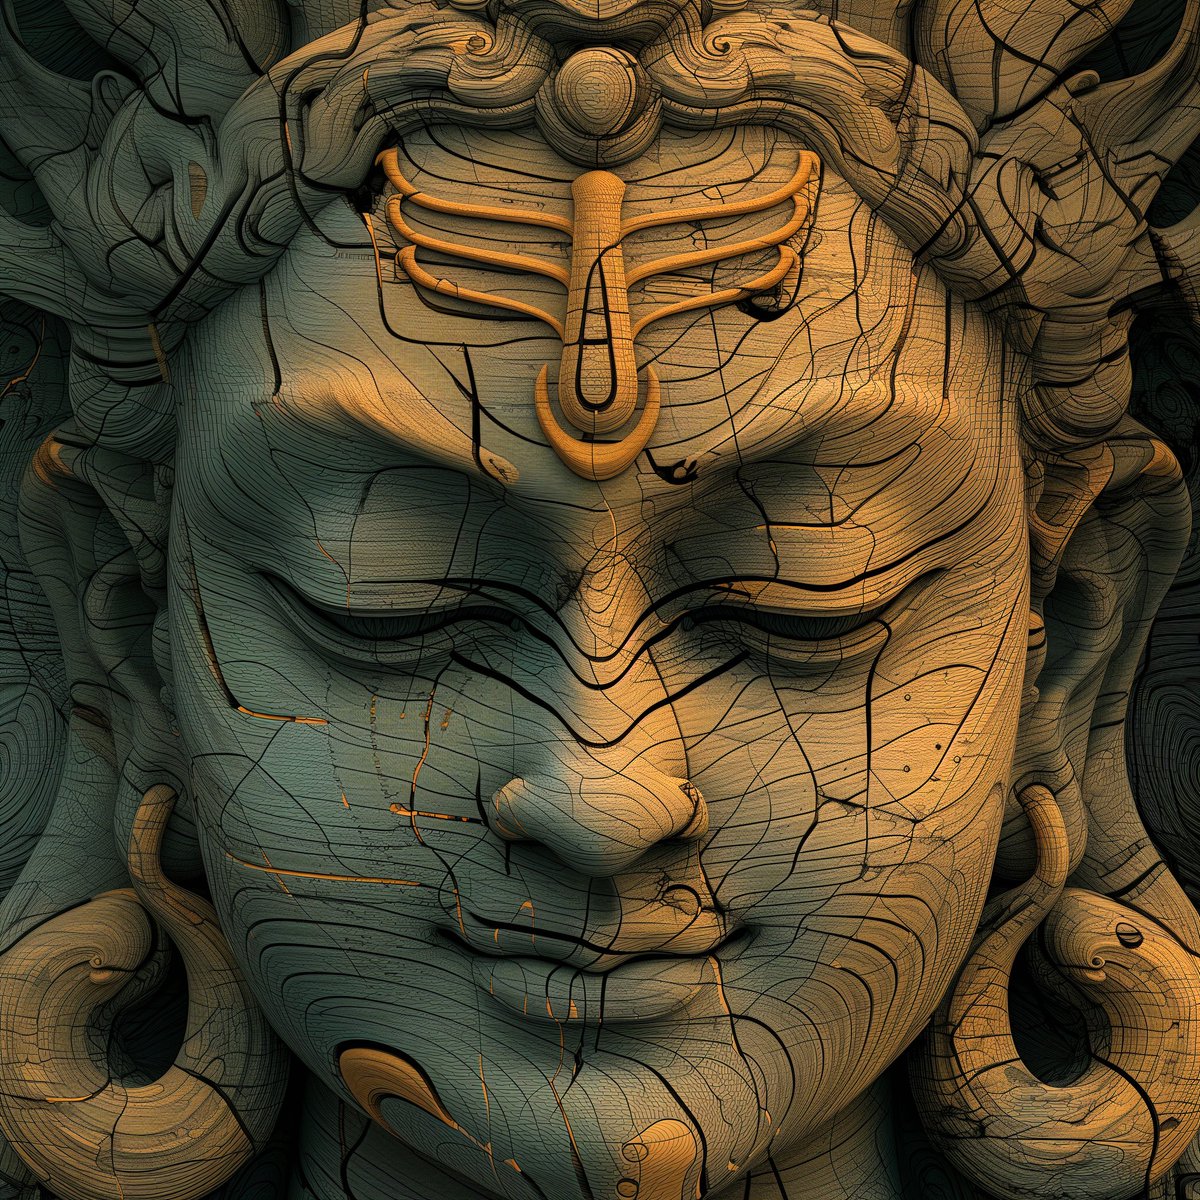 Shiva close-up
#graphictheory #midjourney #AIart
#shiva #woodsculpture